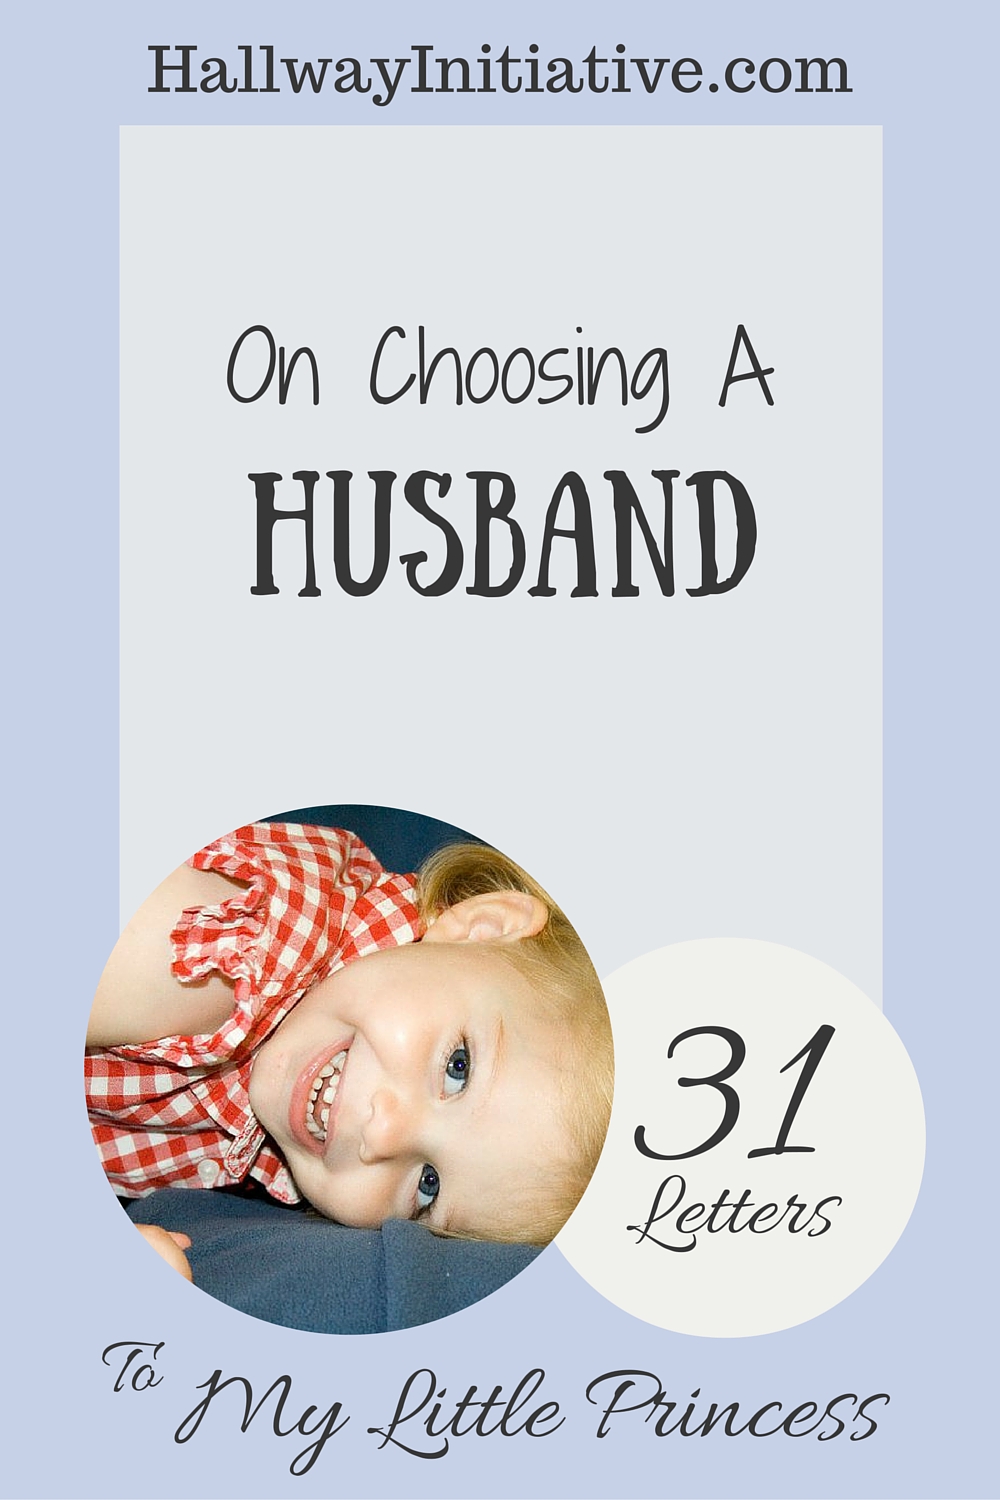 On choosing a husband